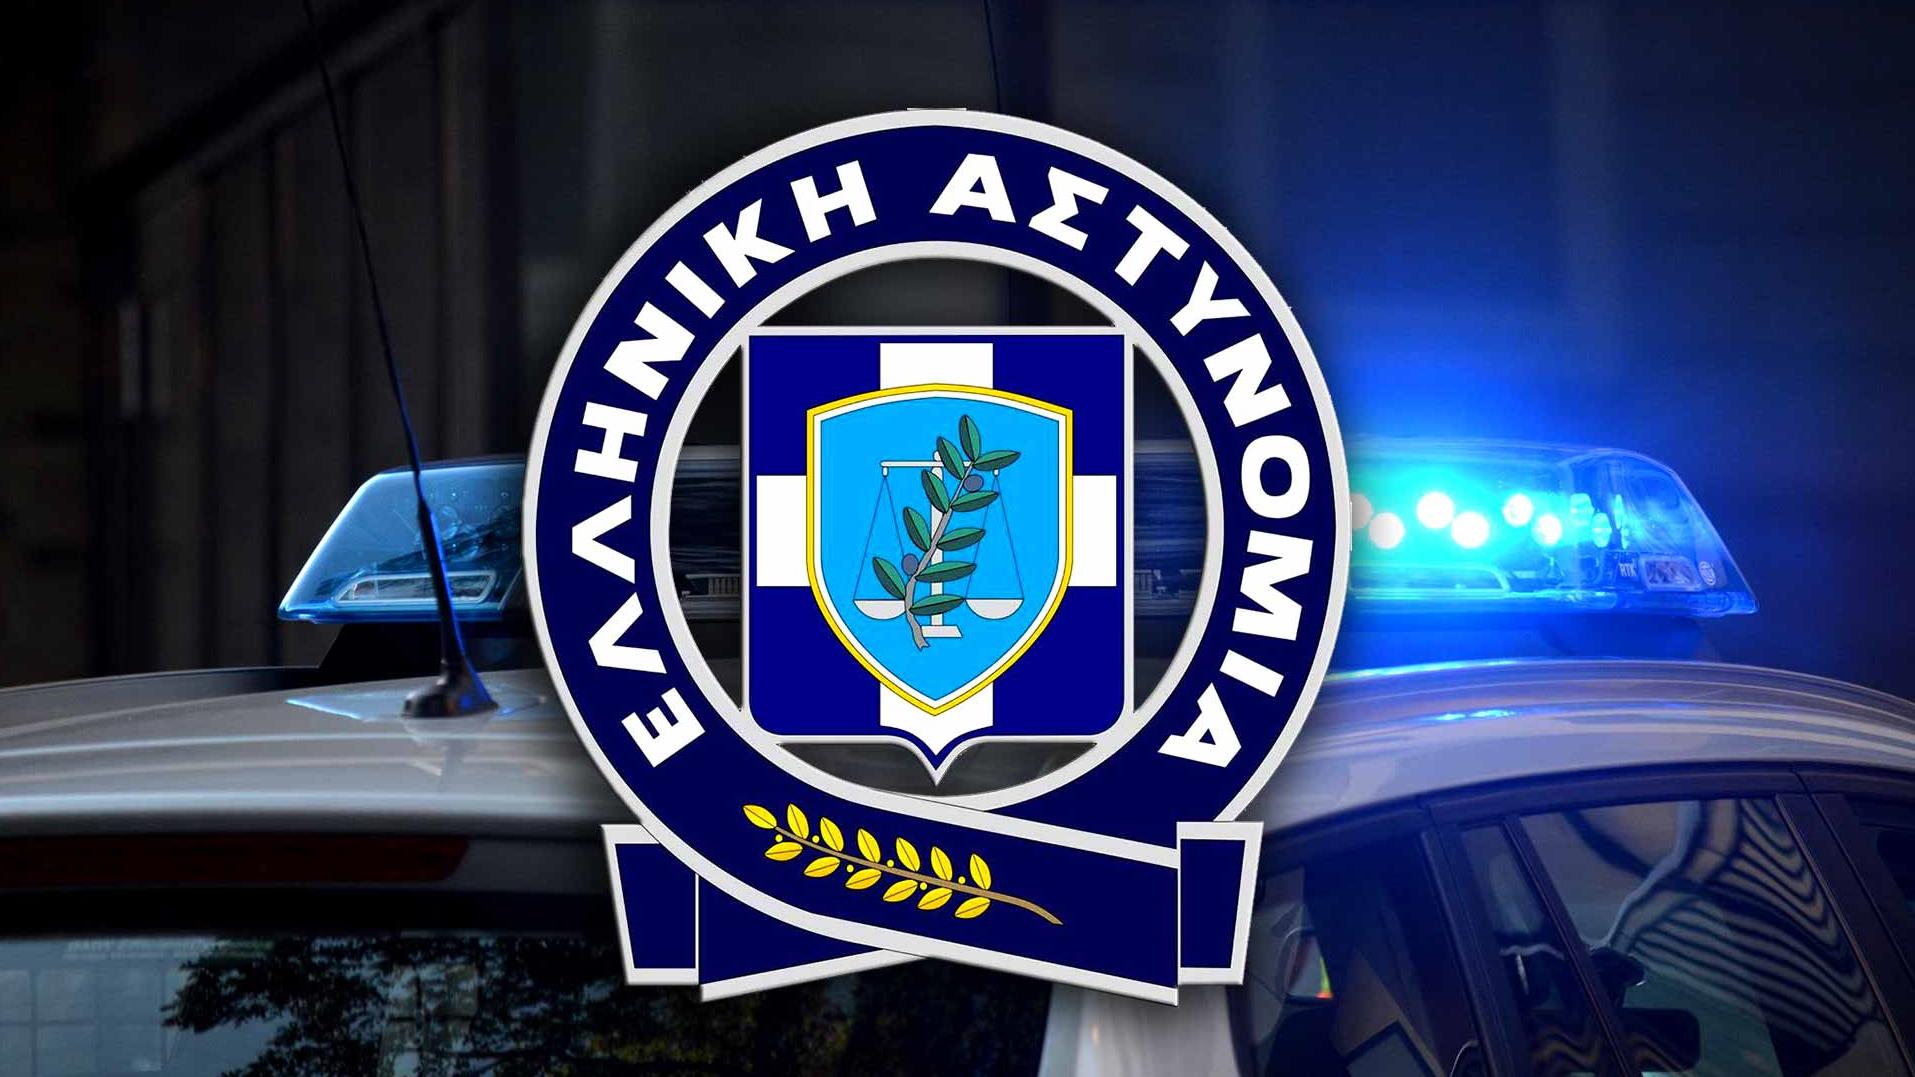 You are currently viewing Προκήρυξη για εισαγωγή Αξιωματικών και Αστυφυλάκων της Ελληνικής Αστυνομίας, με το σύστημα των Πανελλαδικών Εξετάσεων έτους 2022 – 2023